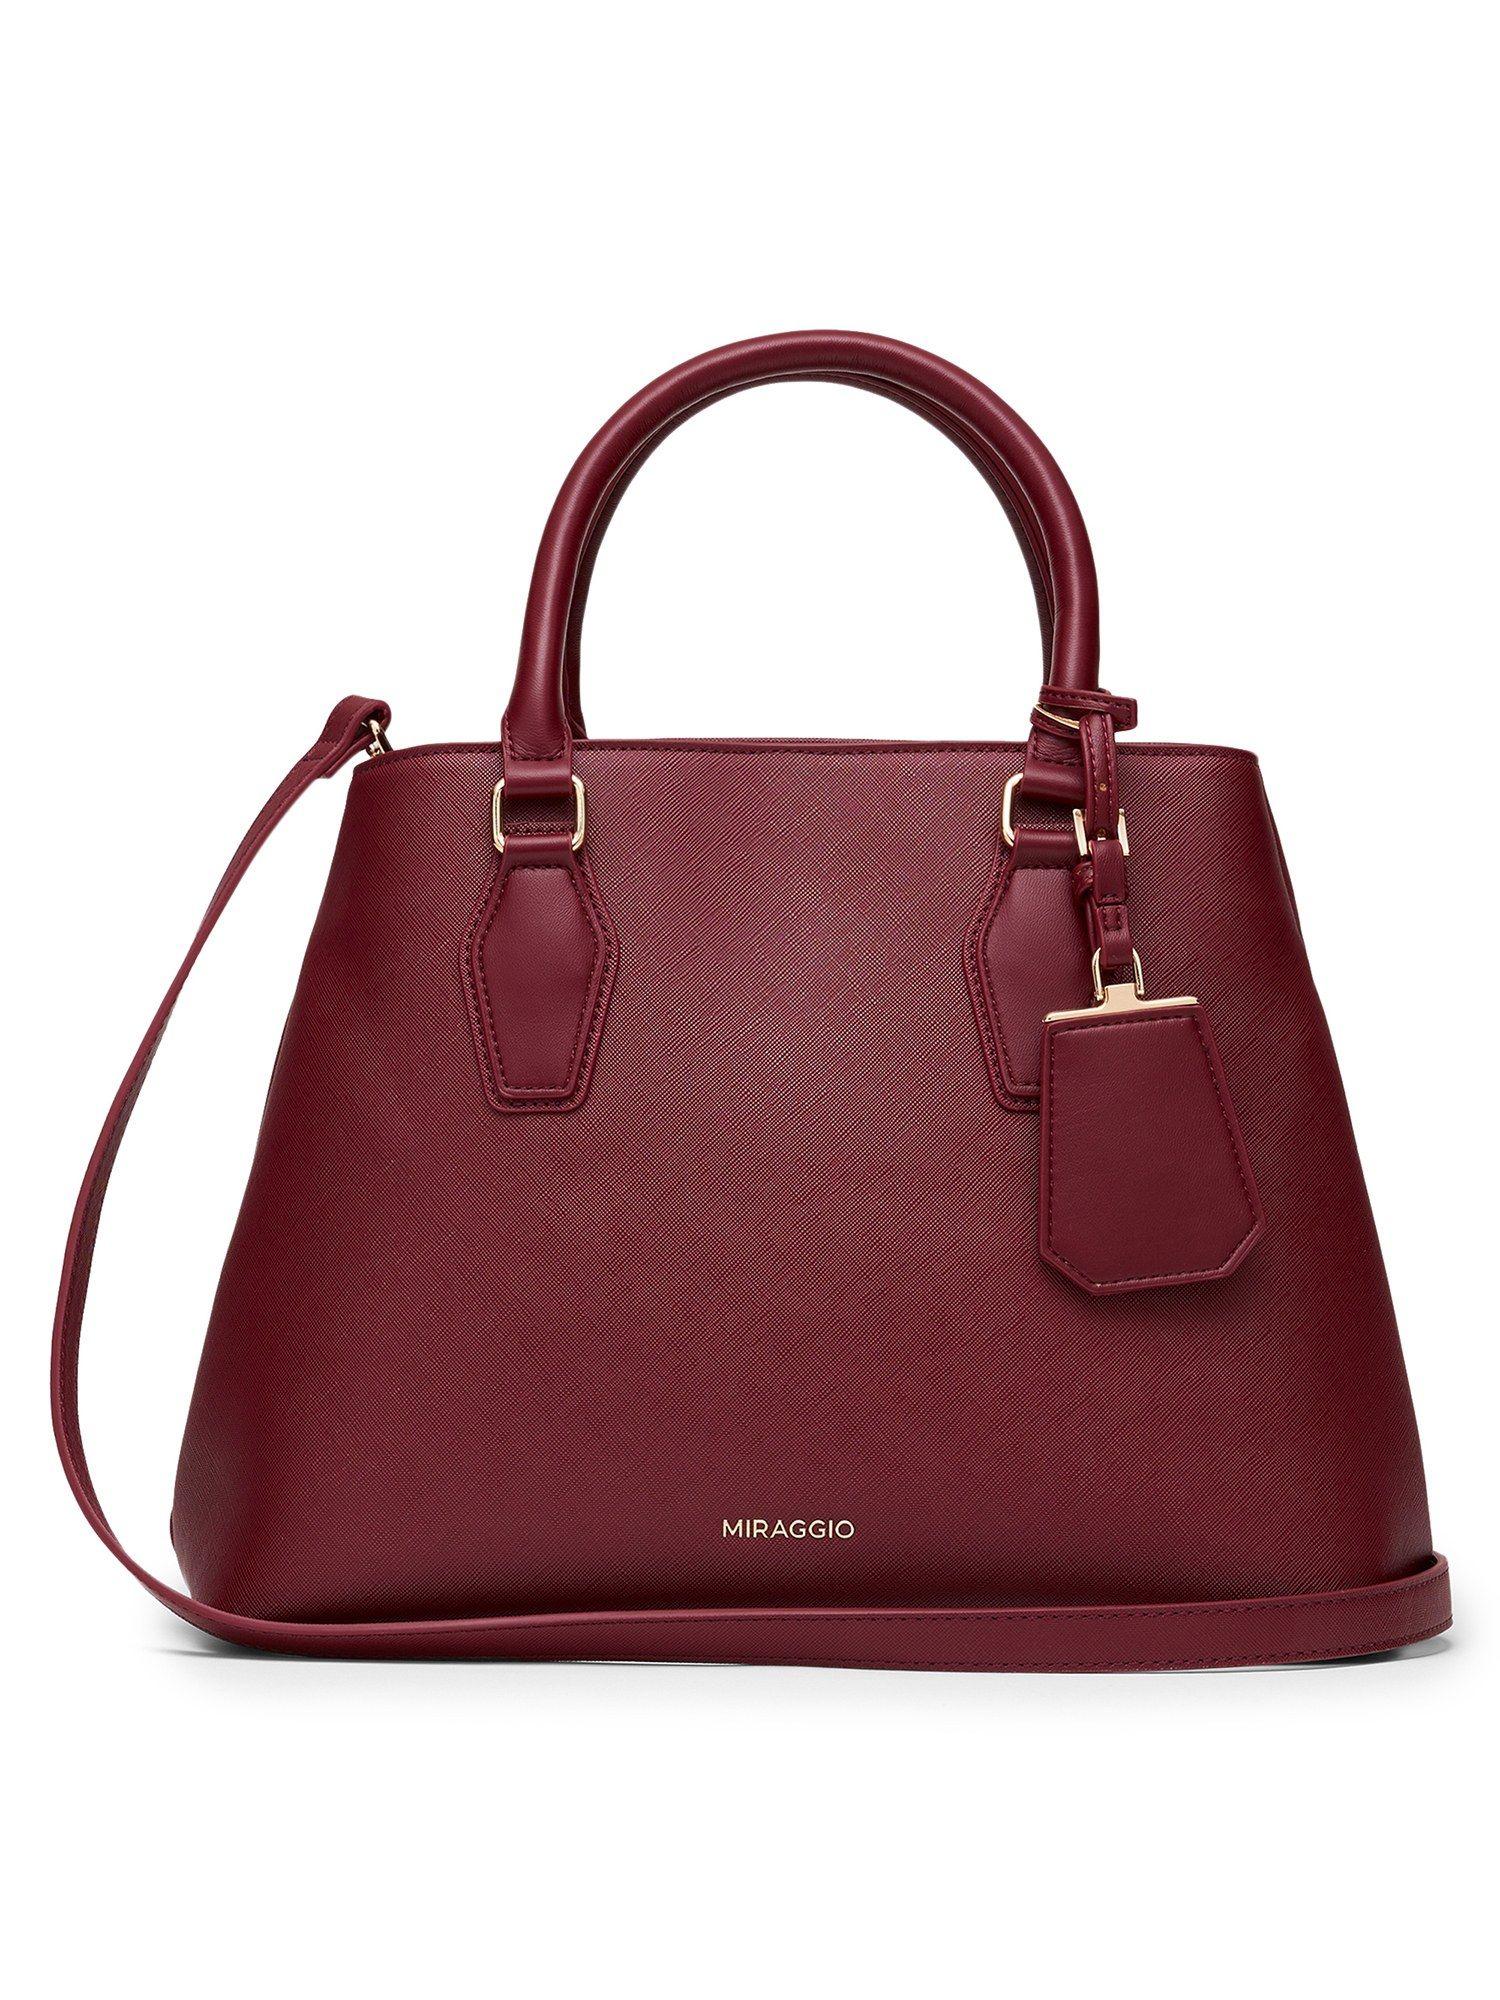 olivia handbag with adjustable and detachable crossbody strap - red (m)